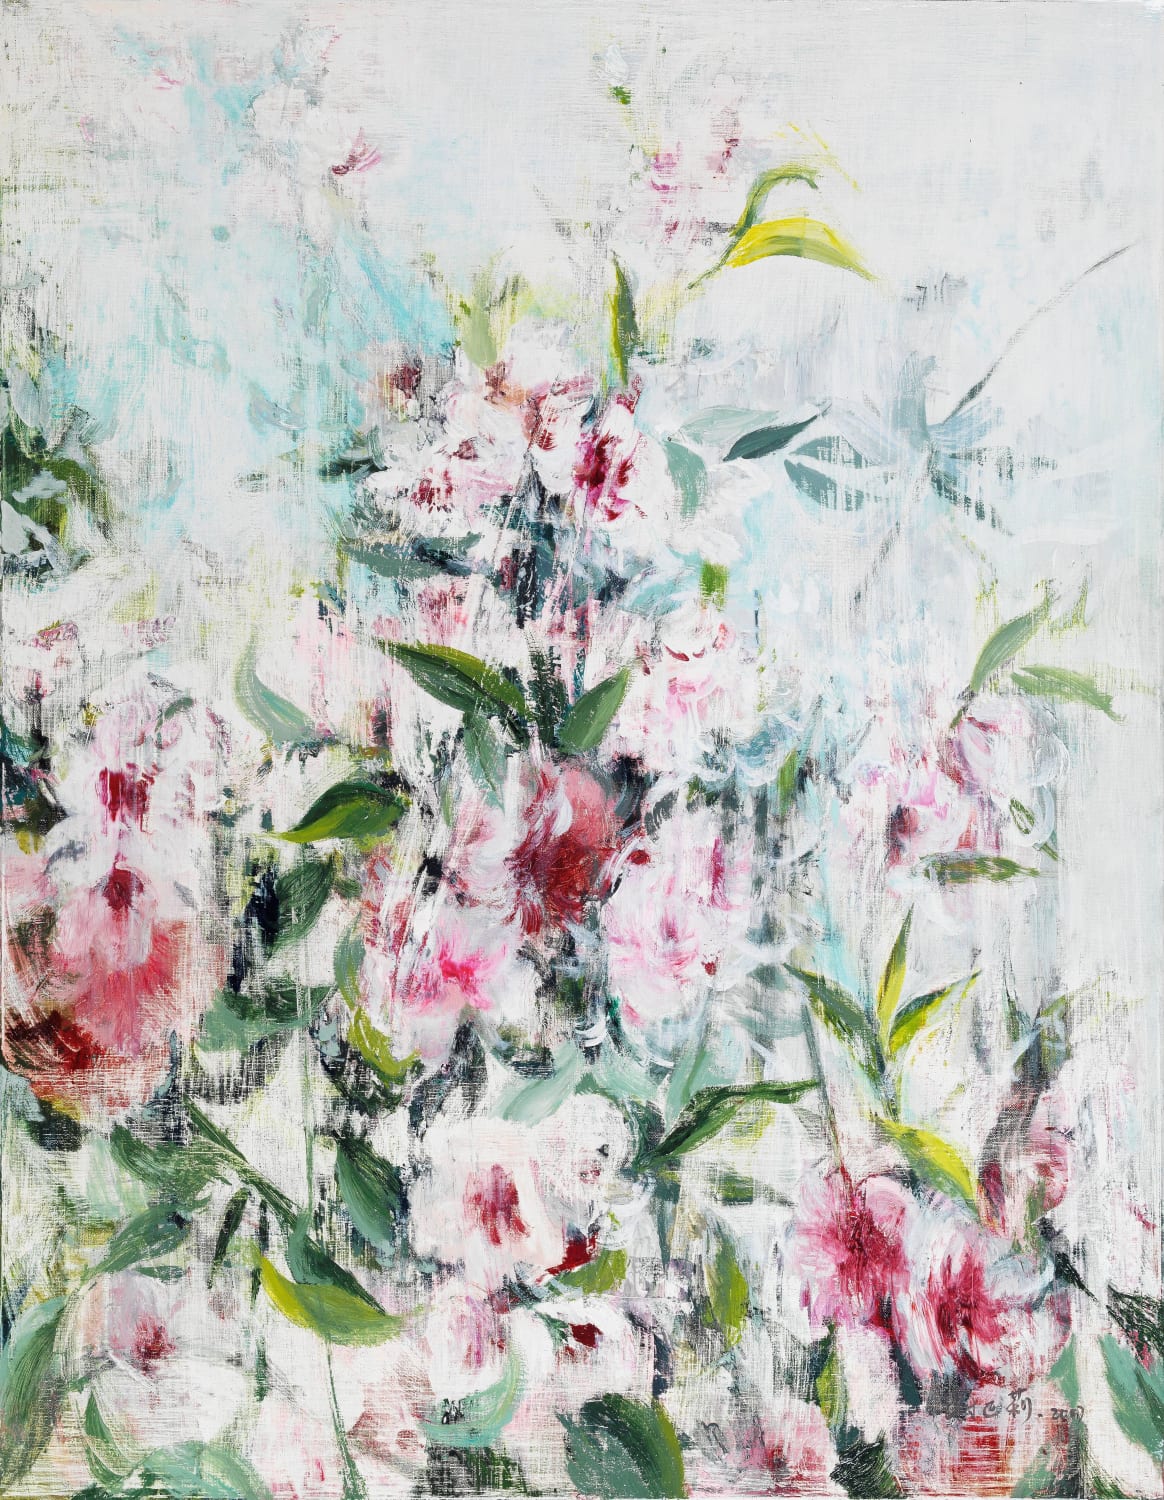 Peach blossom,Me,oil on canvas,cm,2018